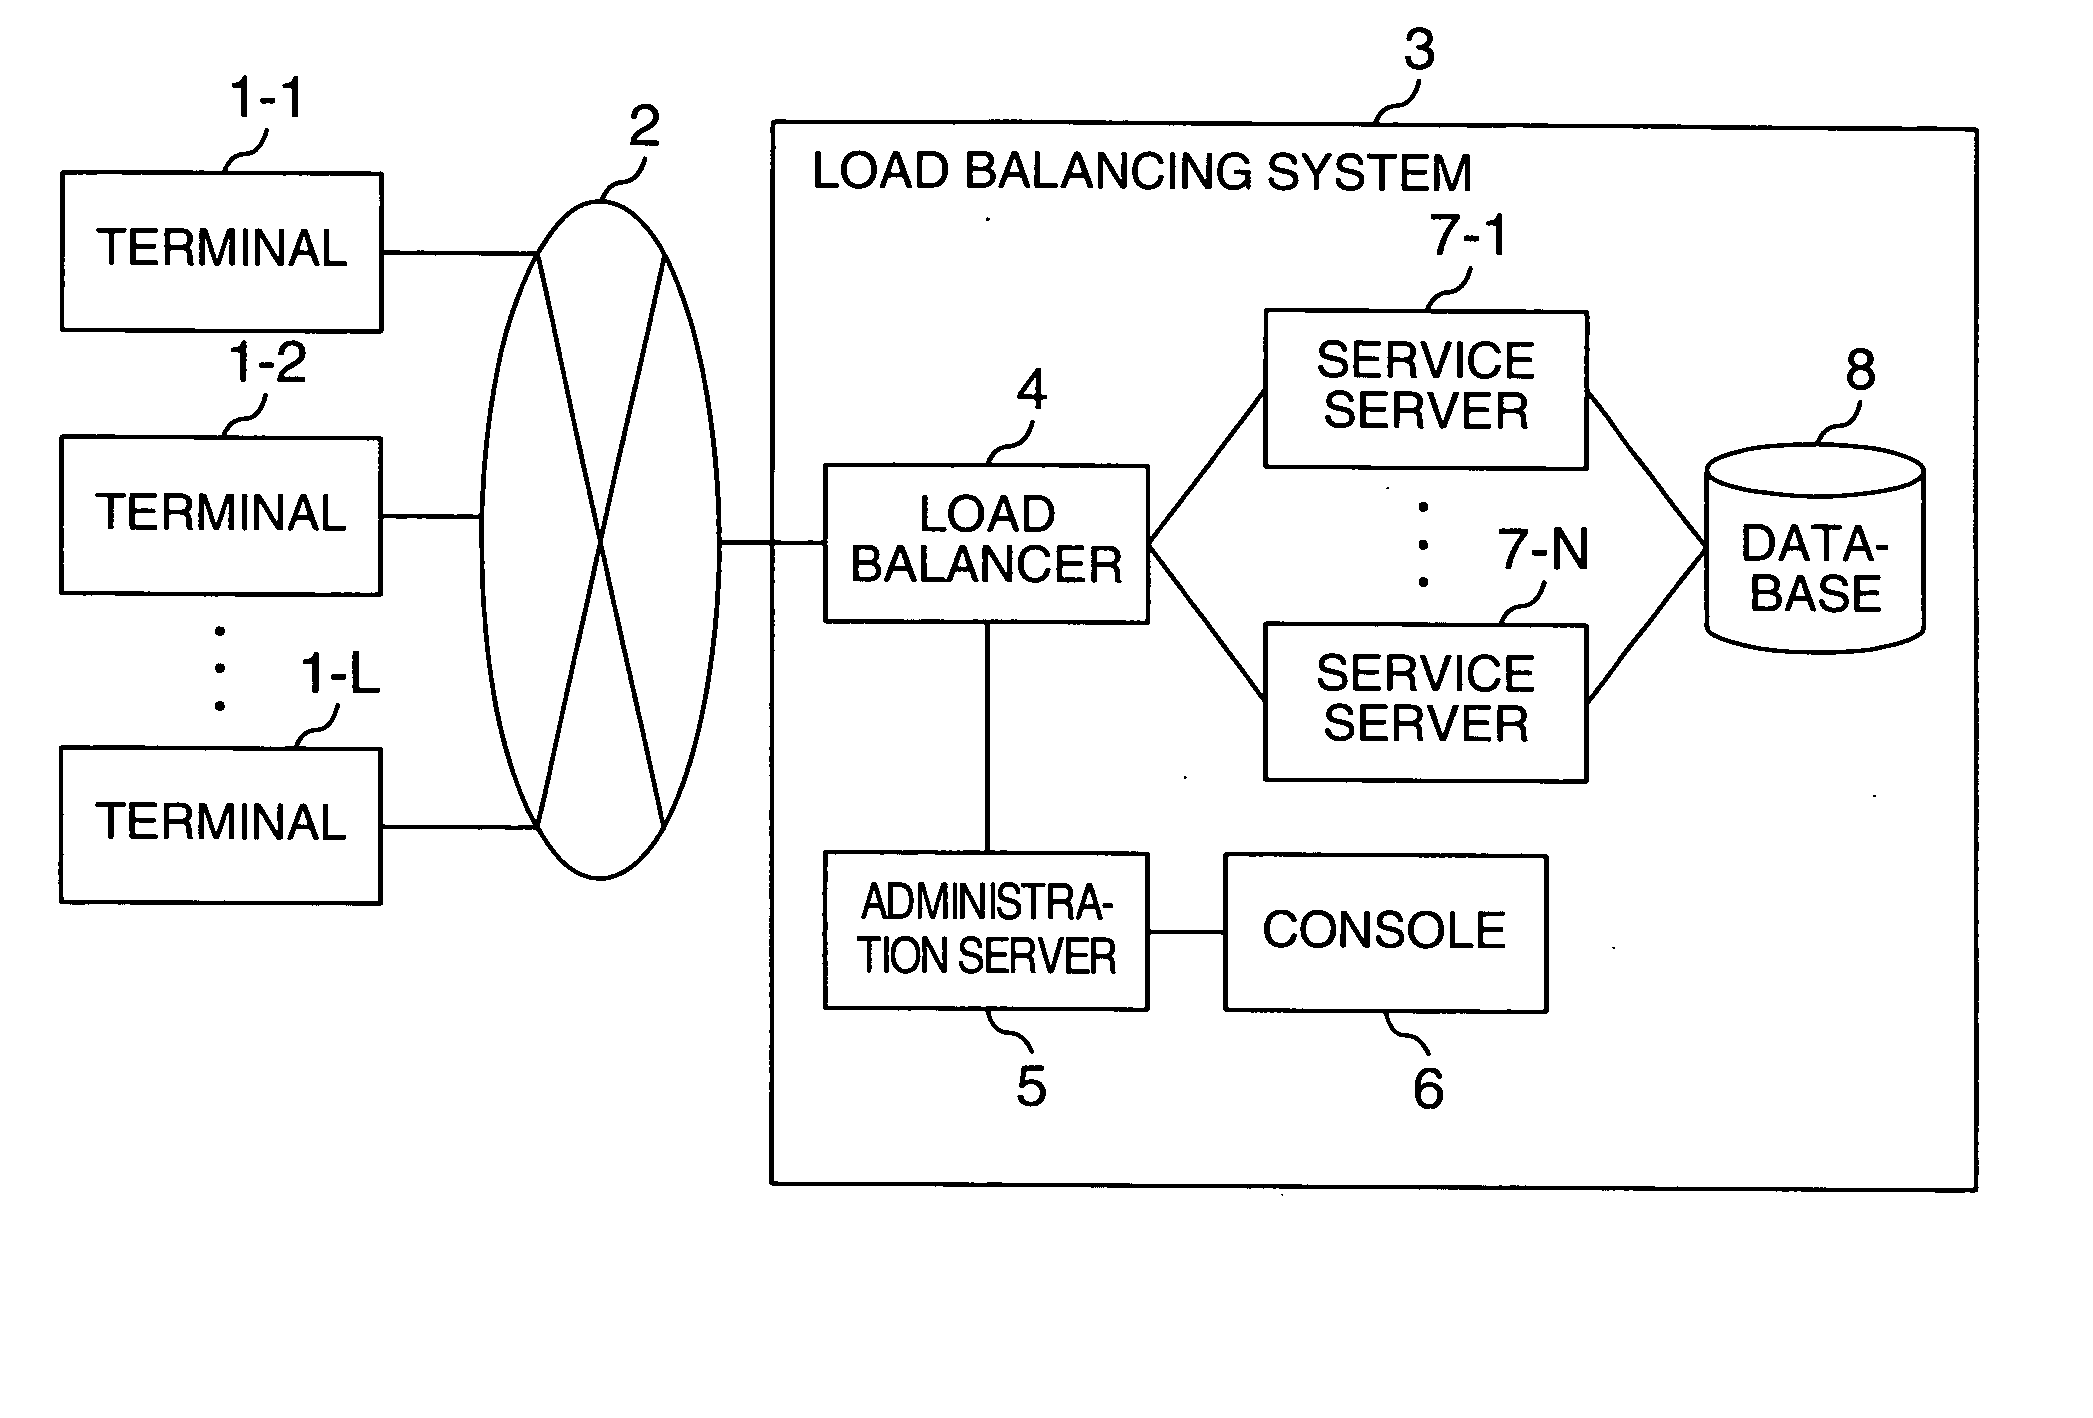 Load balancing system